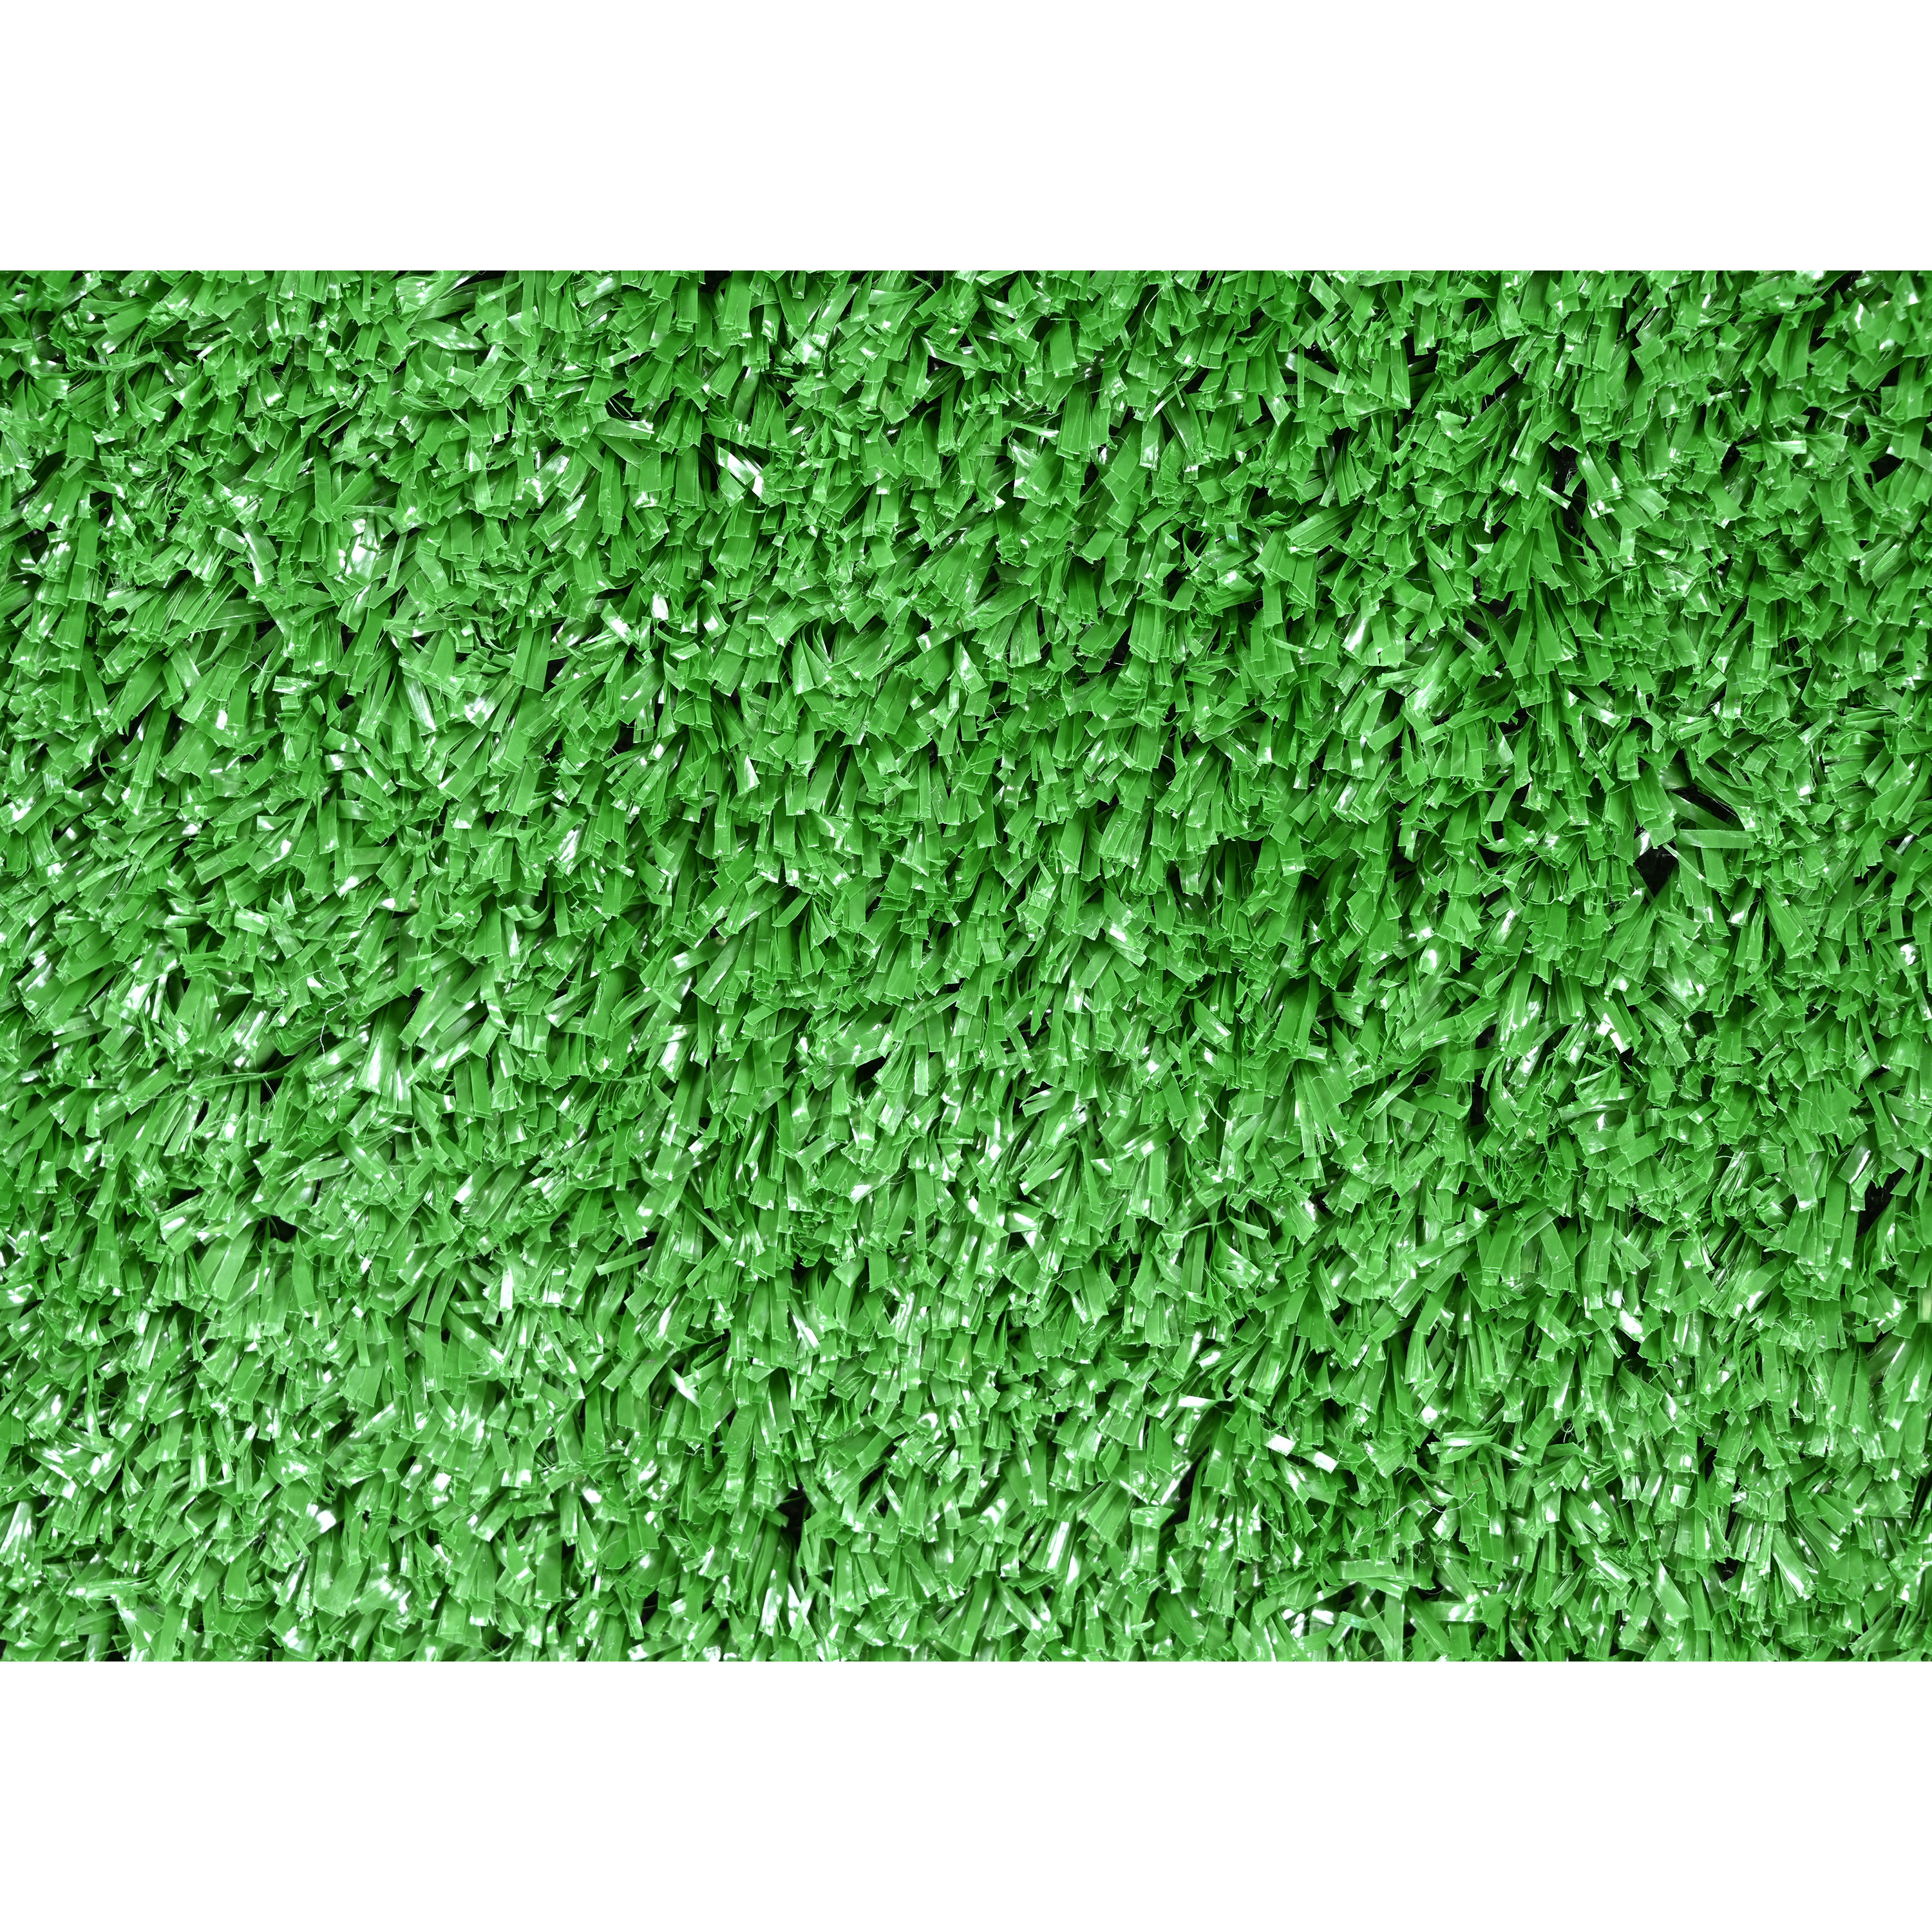 Garland Rug Artificial Grass 4 ft. x 6 ft. Indoor/Outdoor Area Rug Green - image 2 of 6